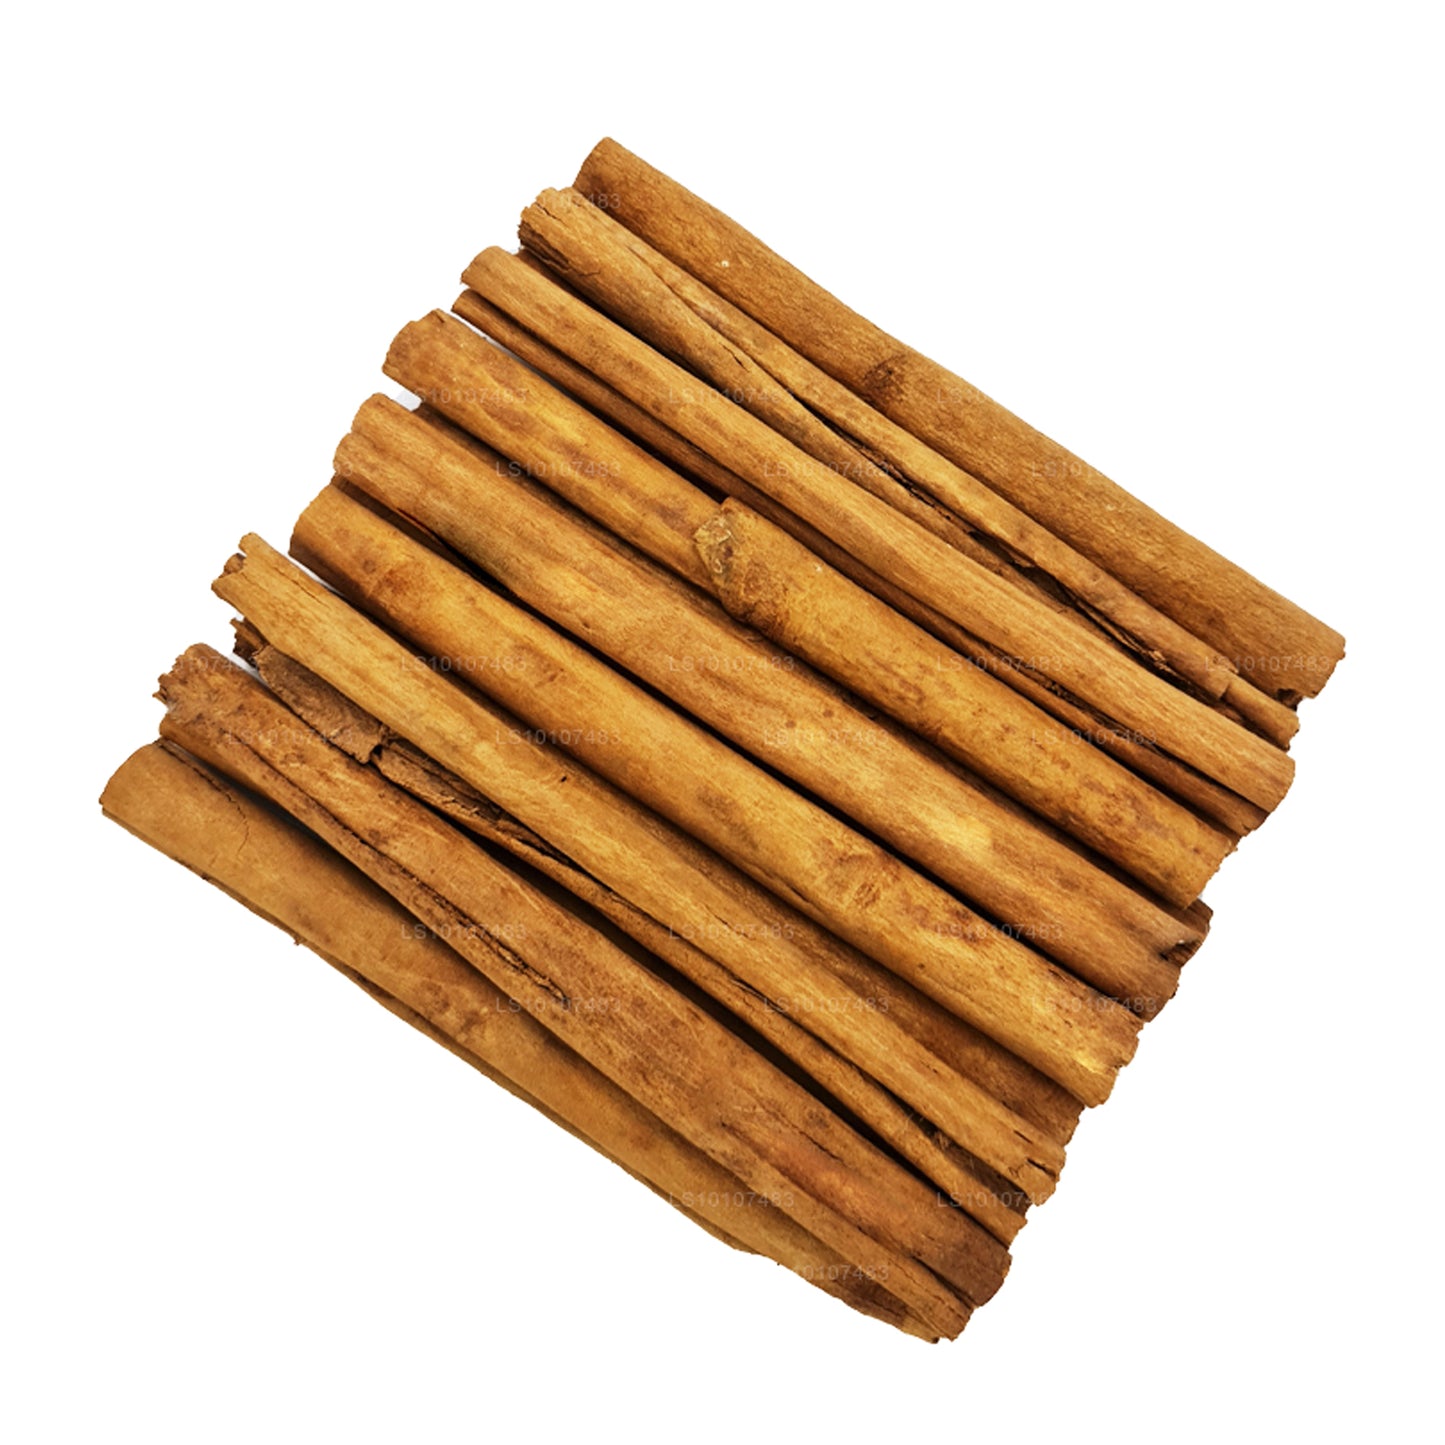 Organic Ceylon Cinnamon Sticks, Authentic "C4/C5" Grade (Quill diameter 16 mm, 5 Inches long) A pack of 27 True Cinnamon Sticks - 3.52 oz, 100g